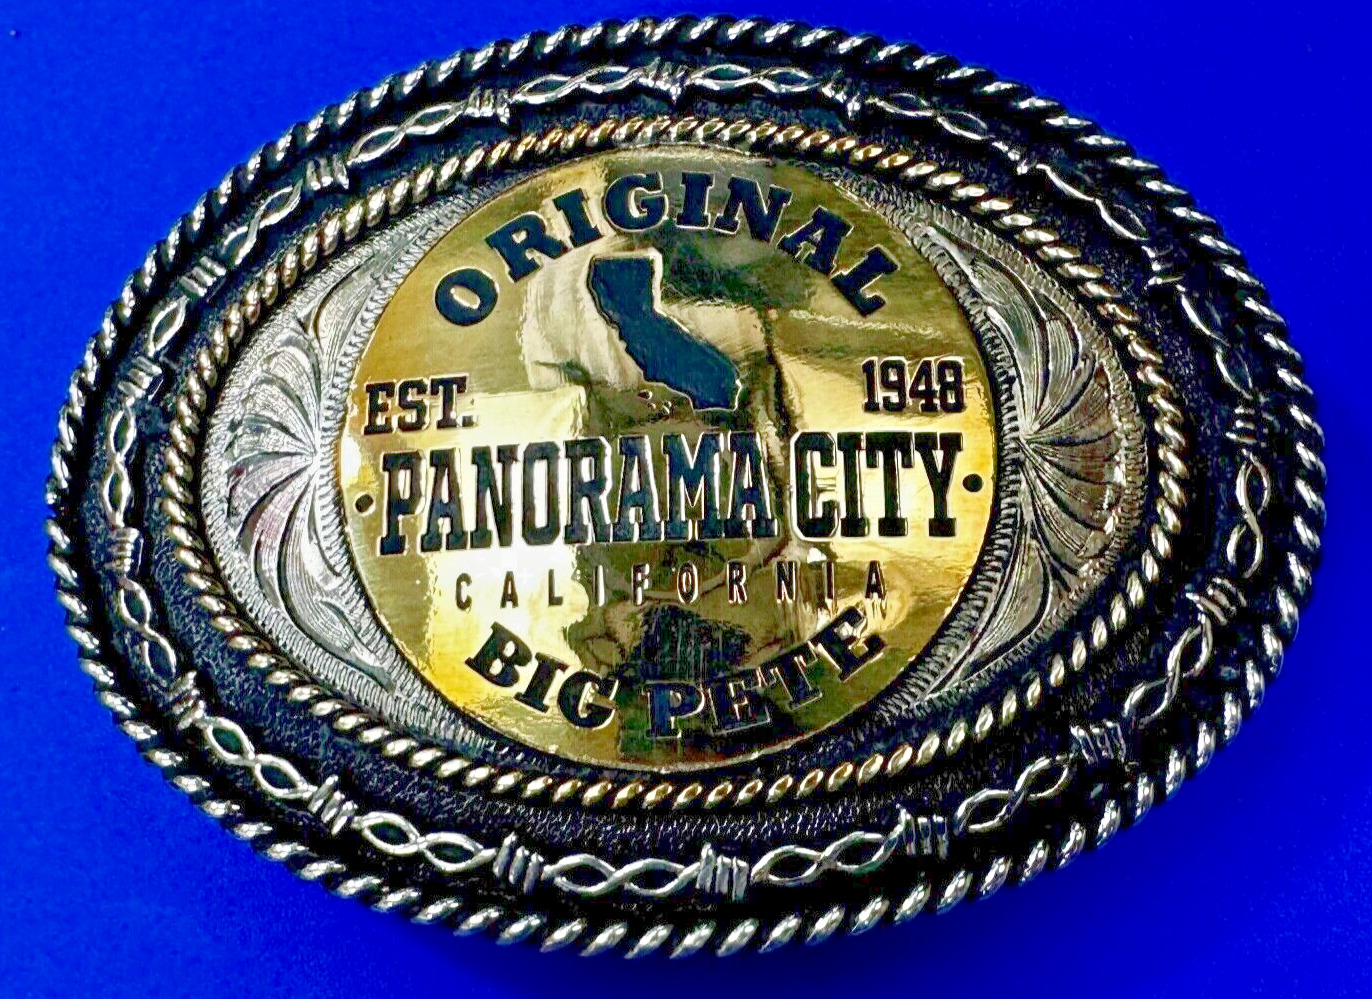 Panorama City California BIG PETE Original 1948 Western Belt Buckle by Tito's